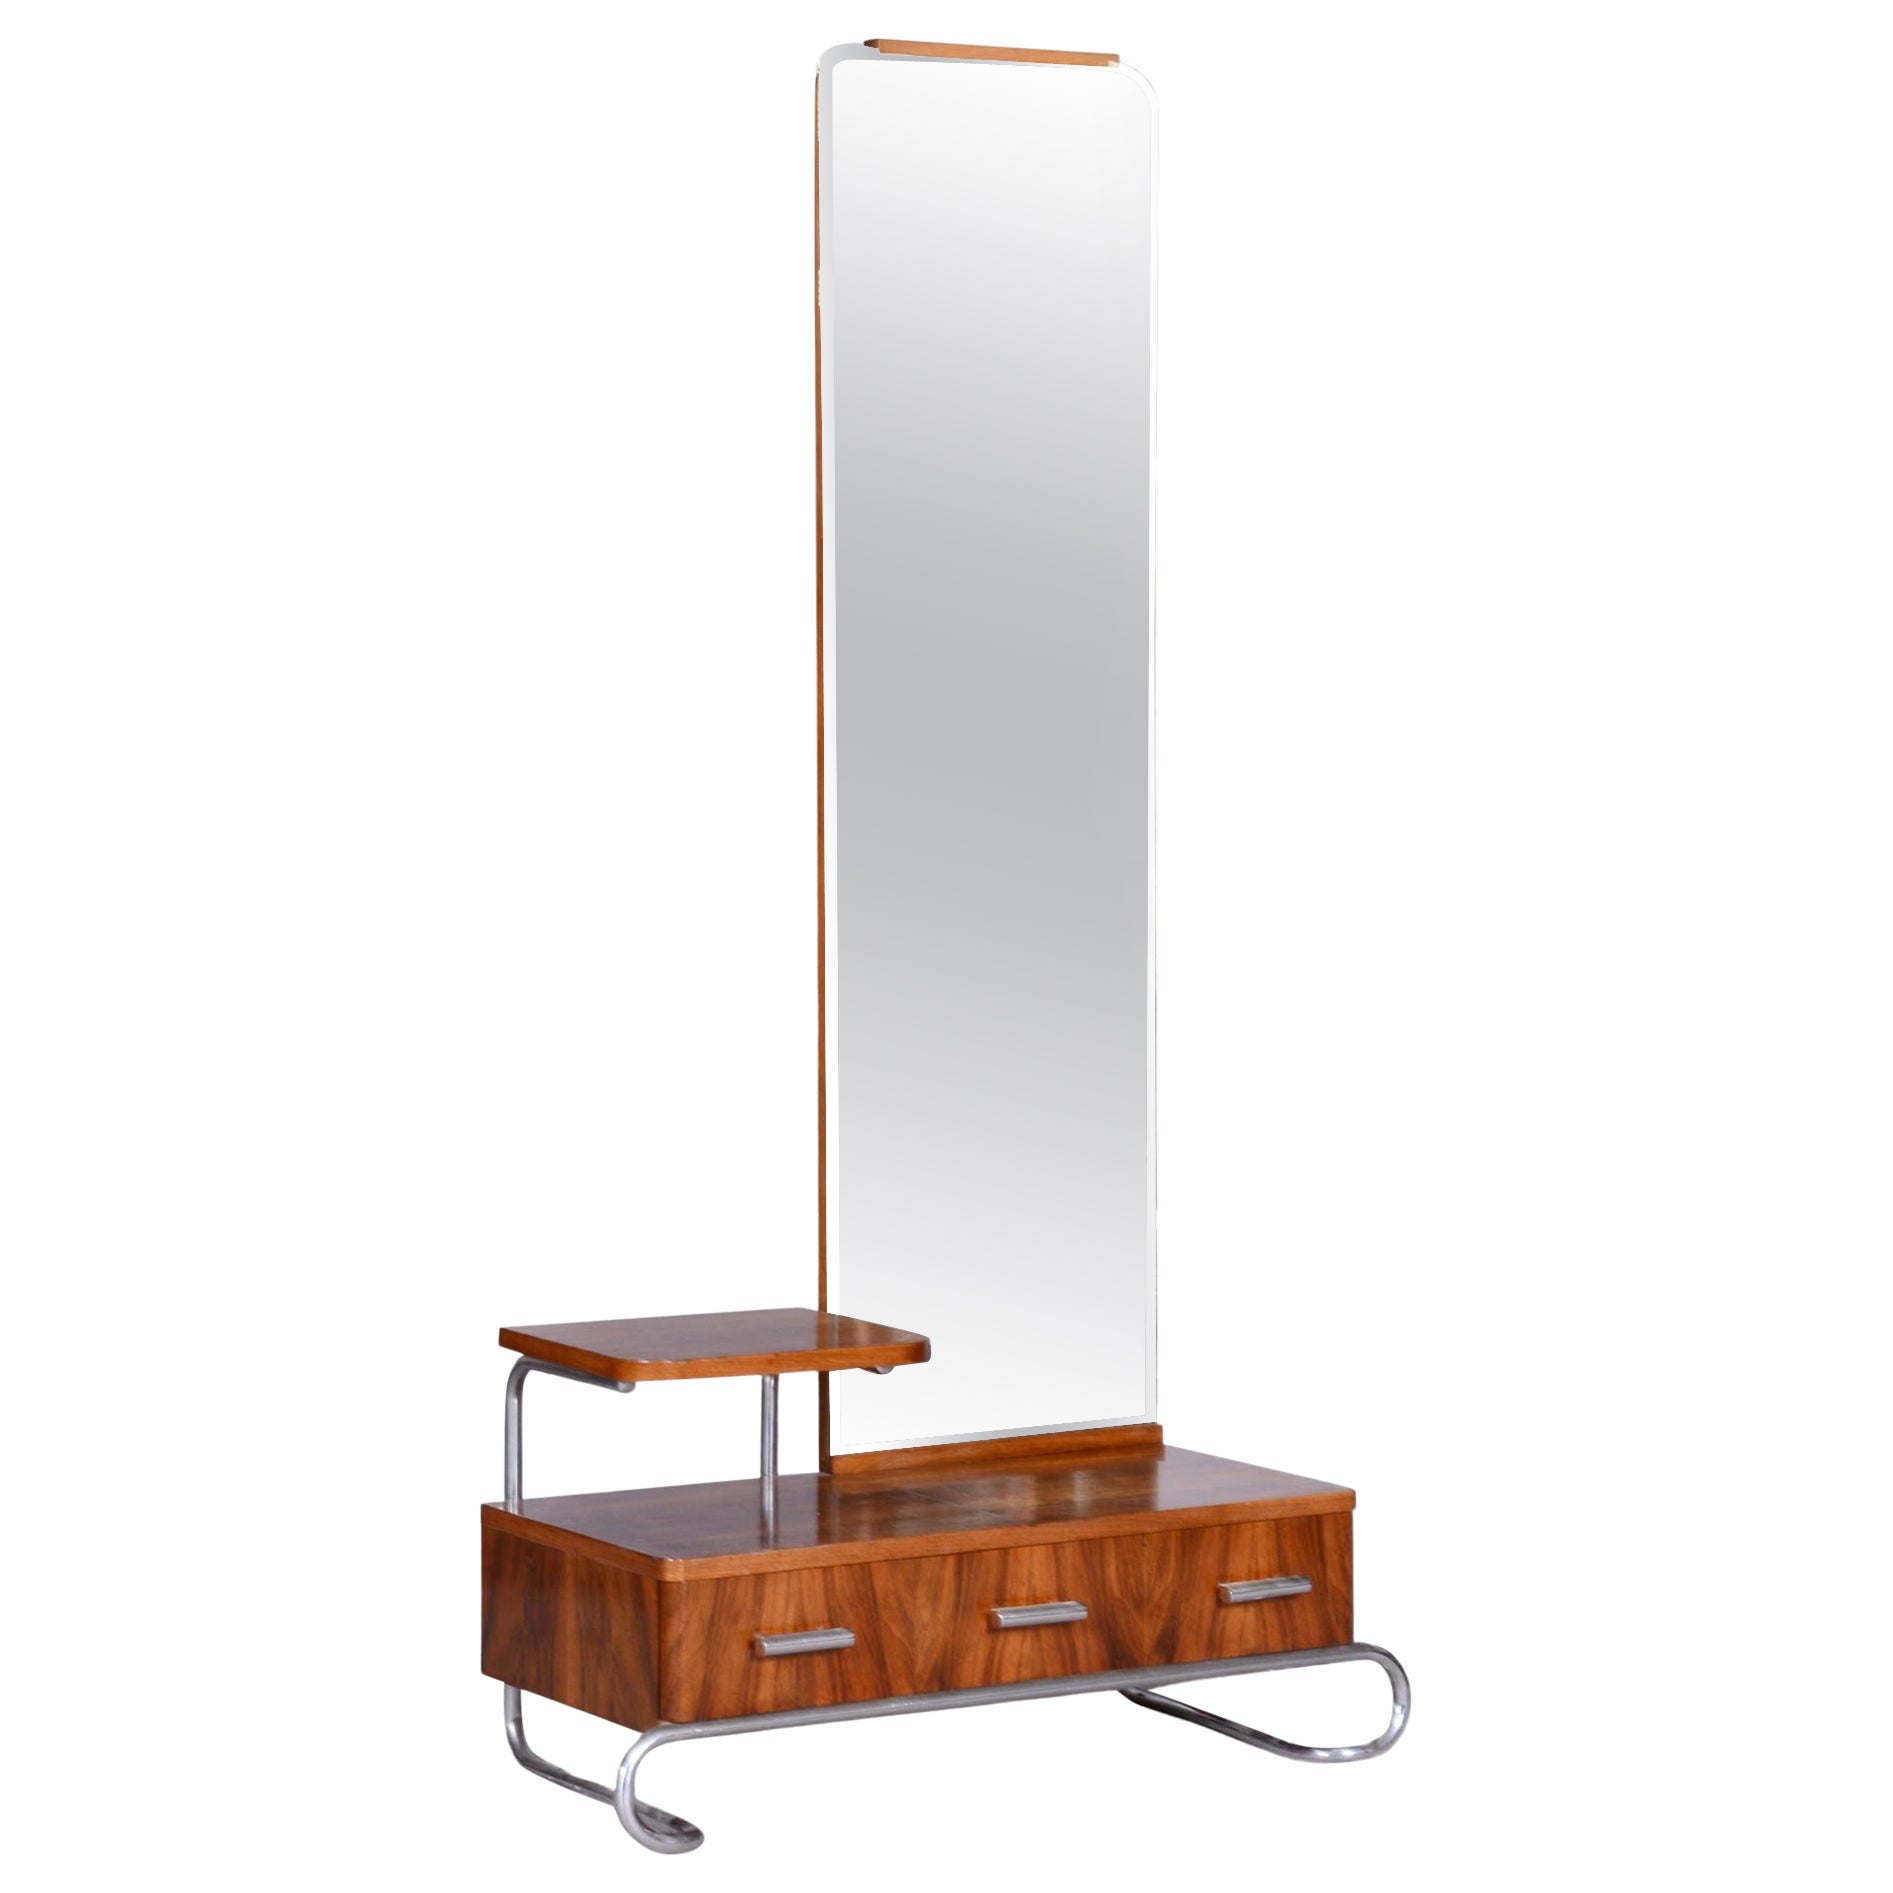 Restored Bauhaus Dressing Mirror, Mücke Melder, Chrome, Walnut, Czechia, 1930s For Sale